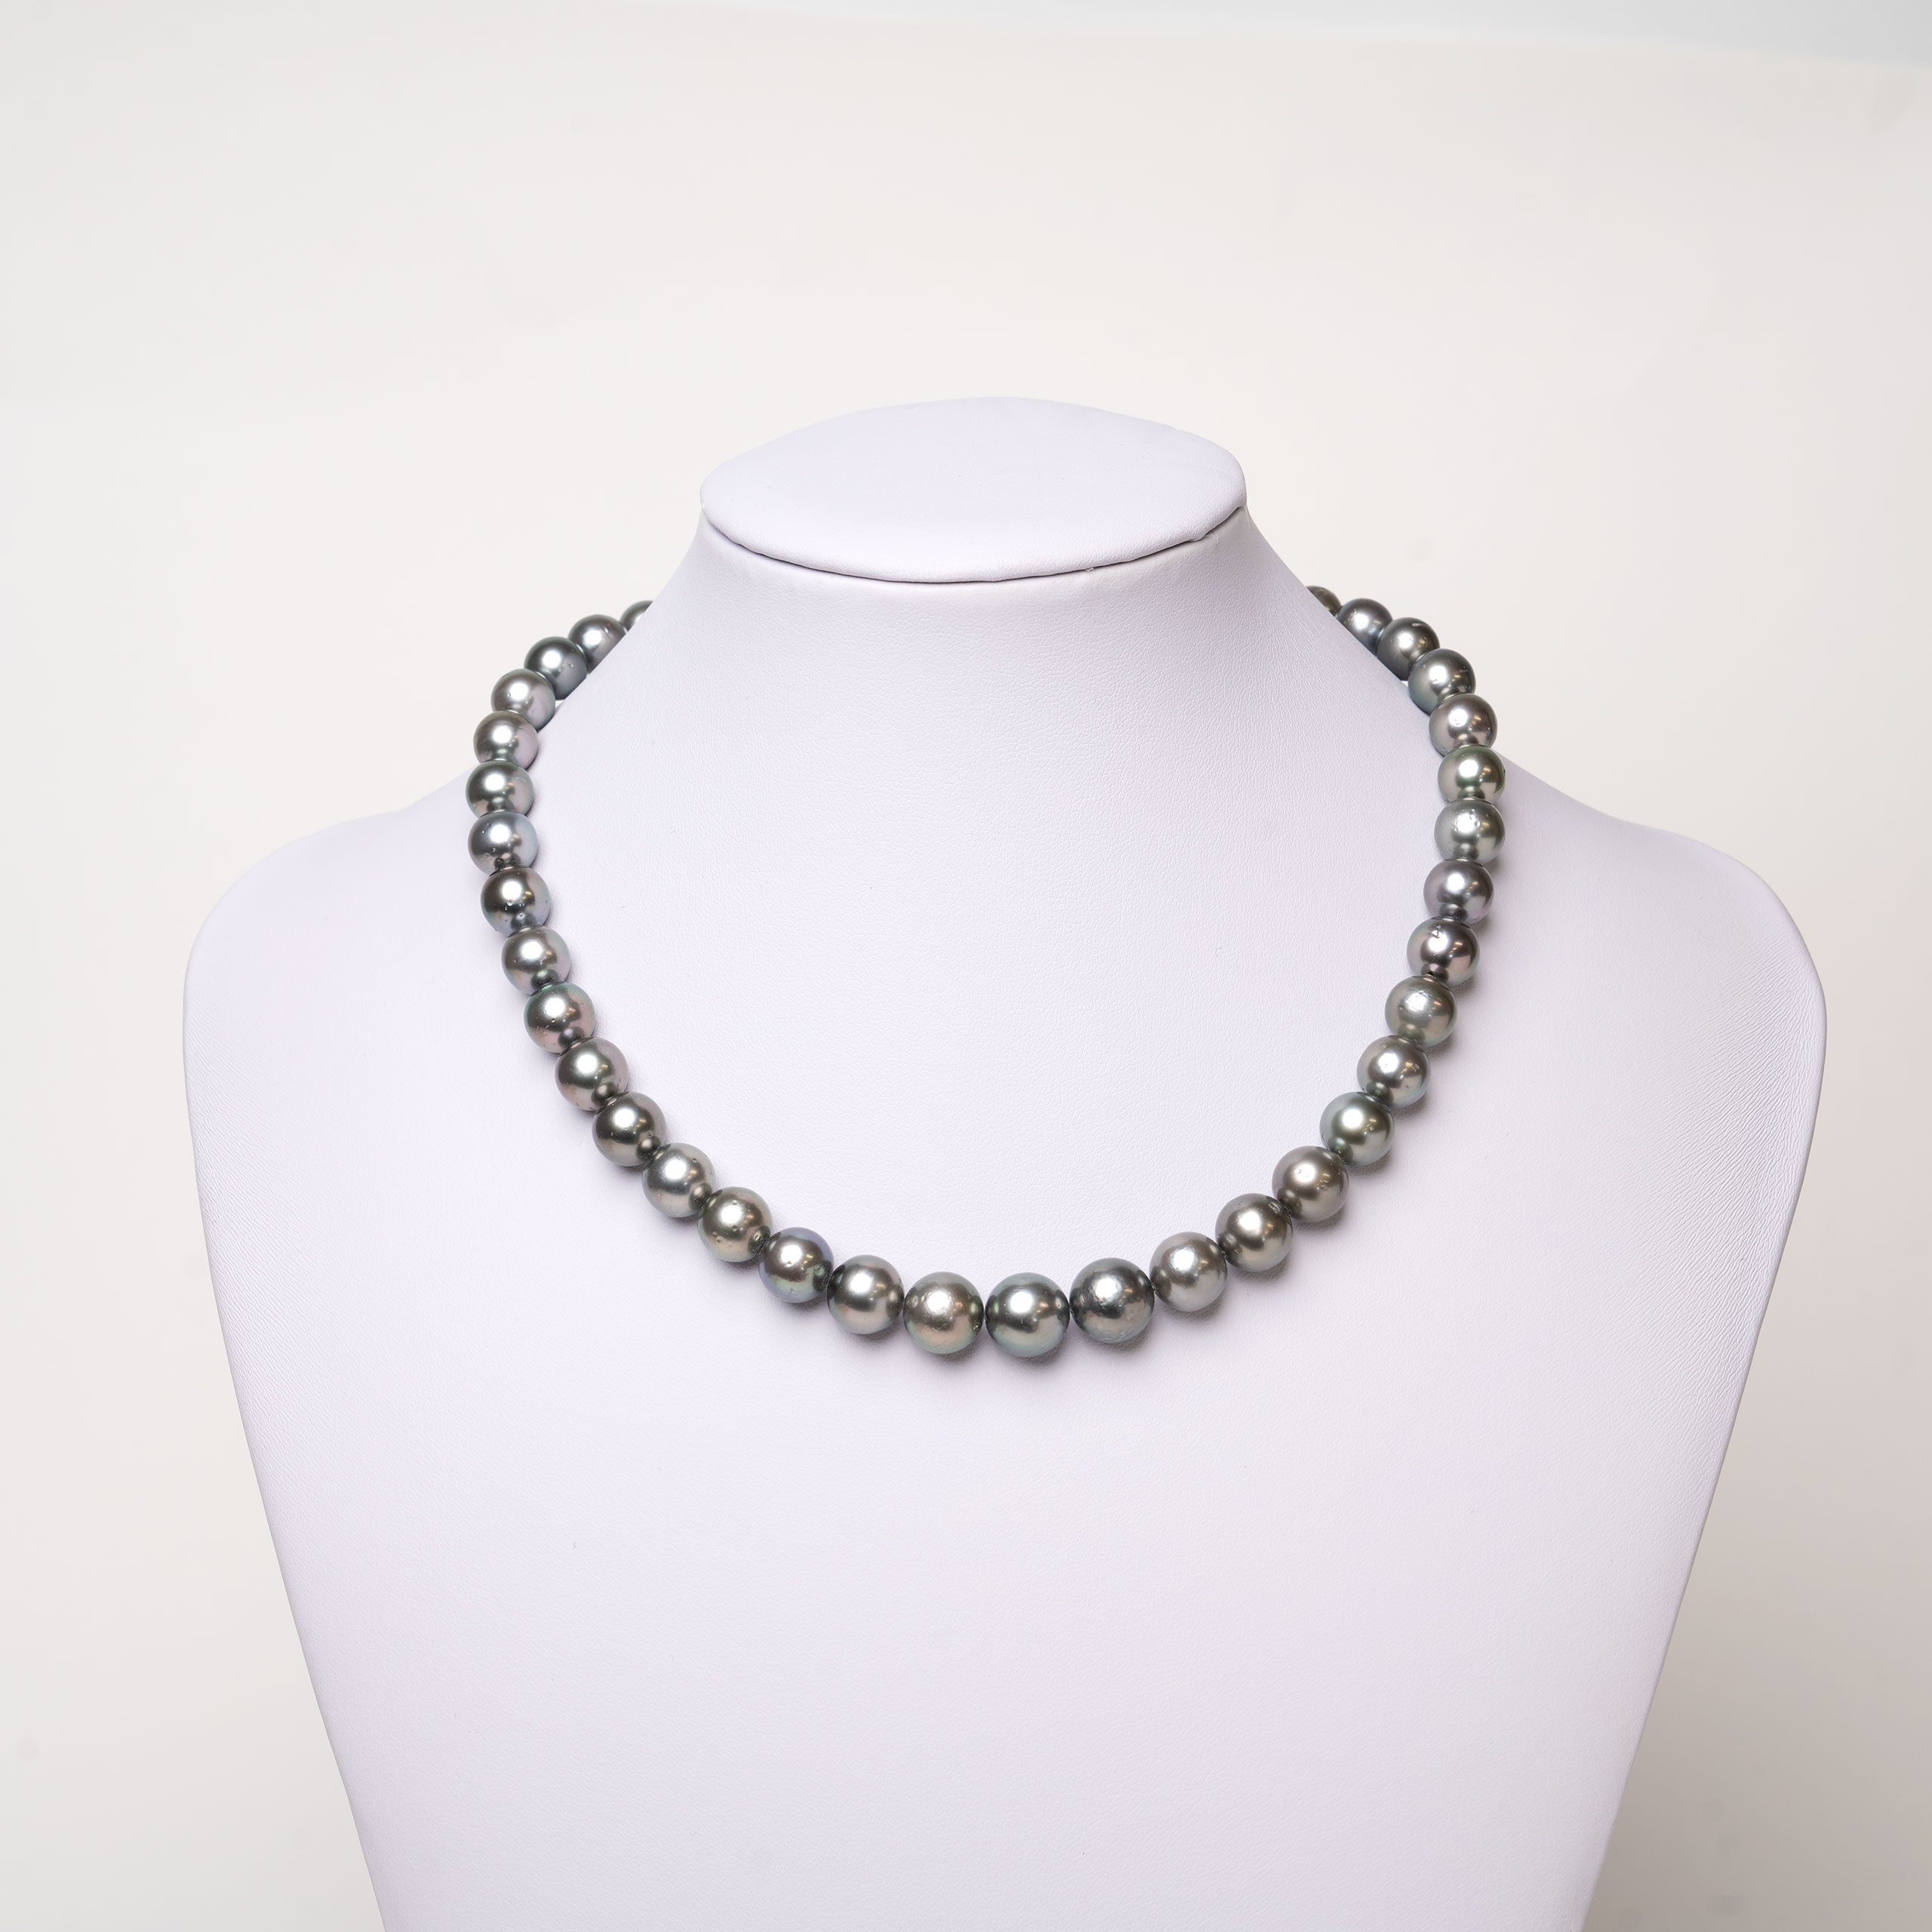 Collar de perlas cultivadas naturales Tahití redondas de 8,2 a 11,2 mm de color gris plateado.